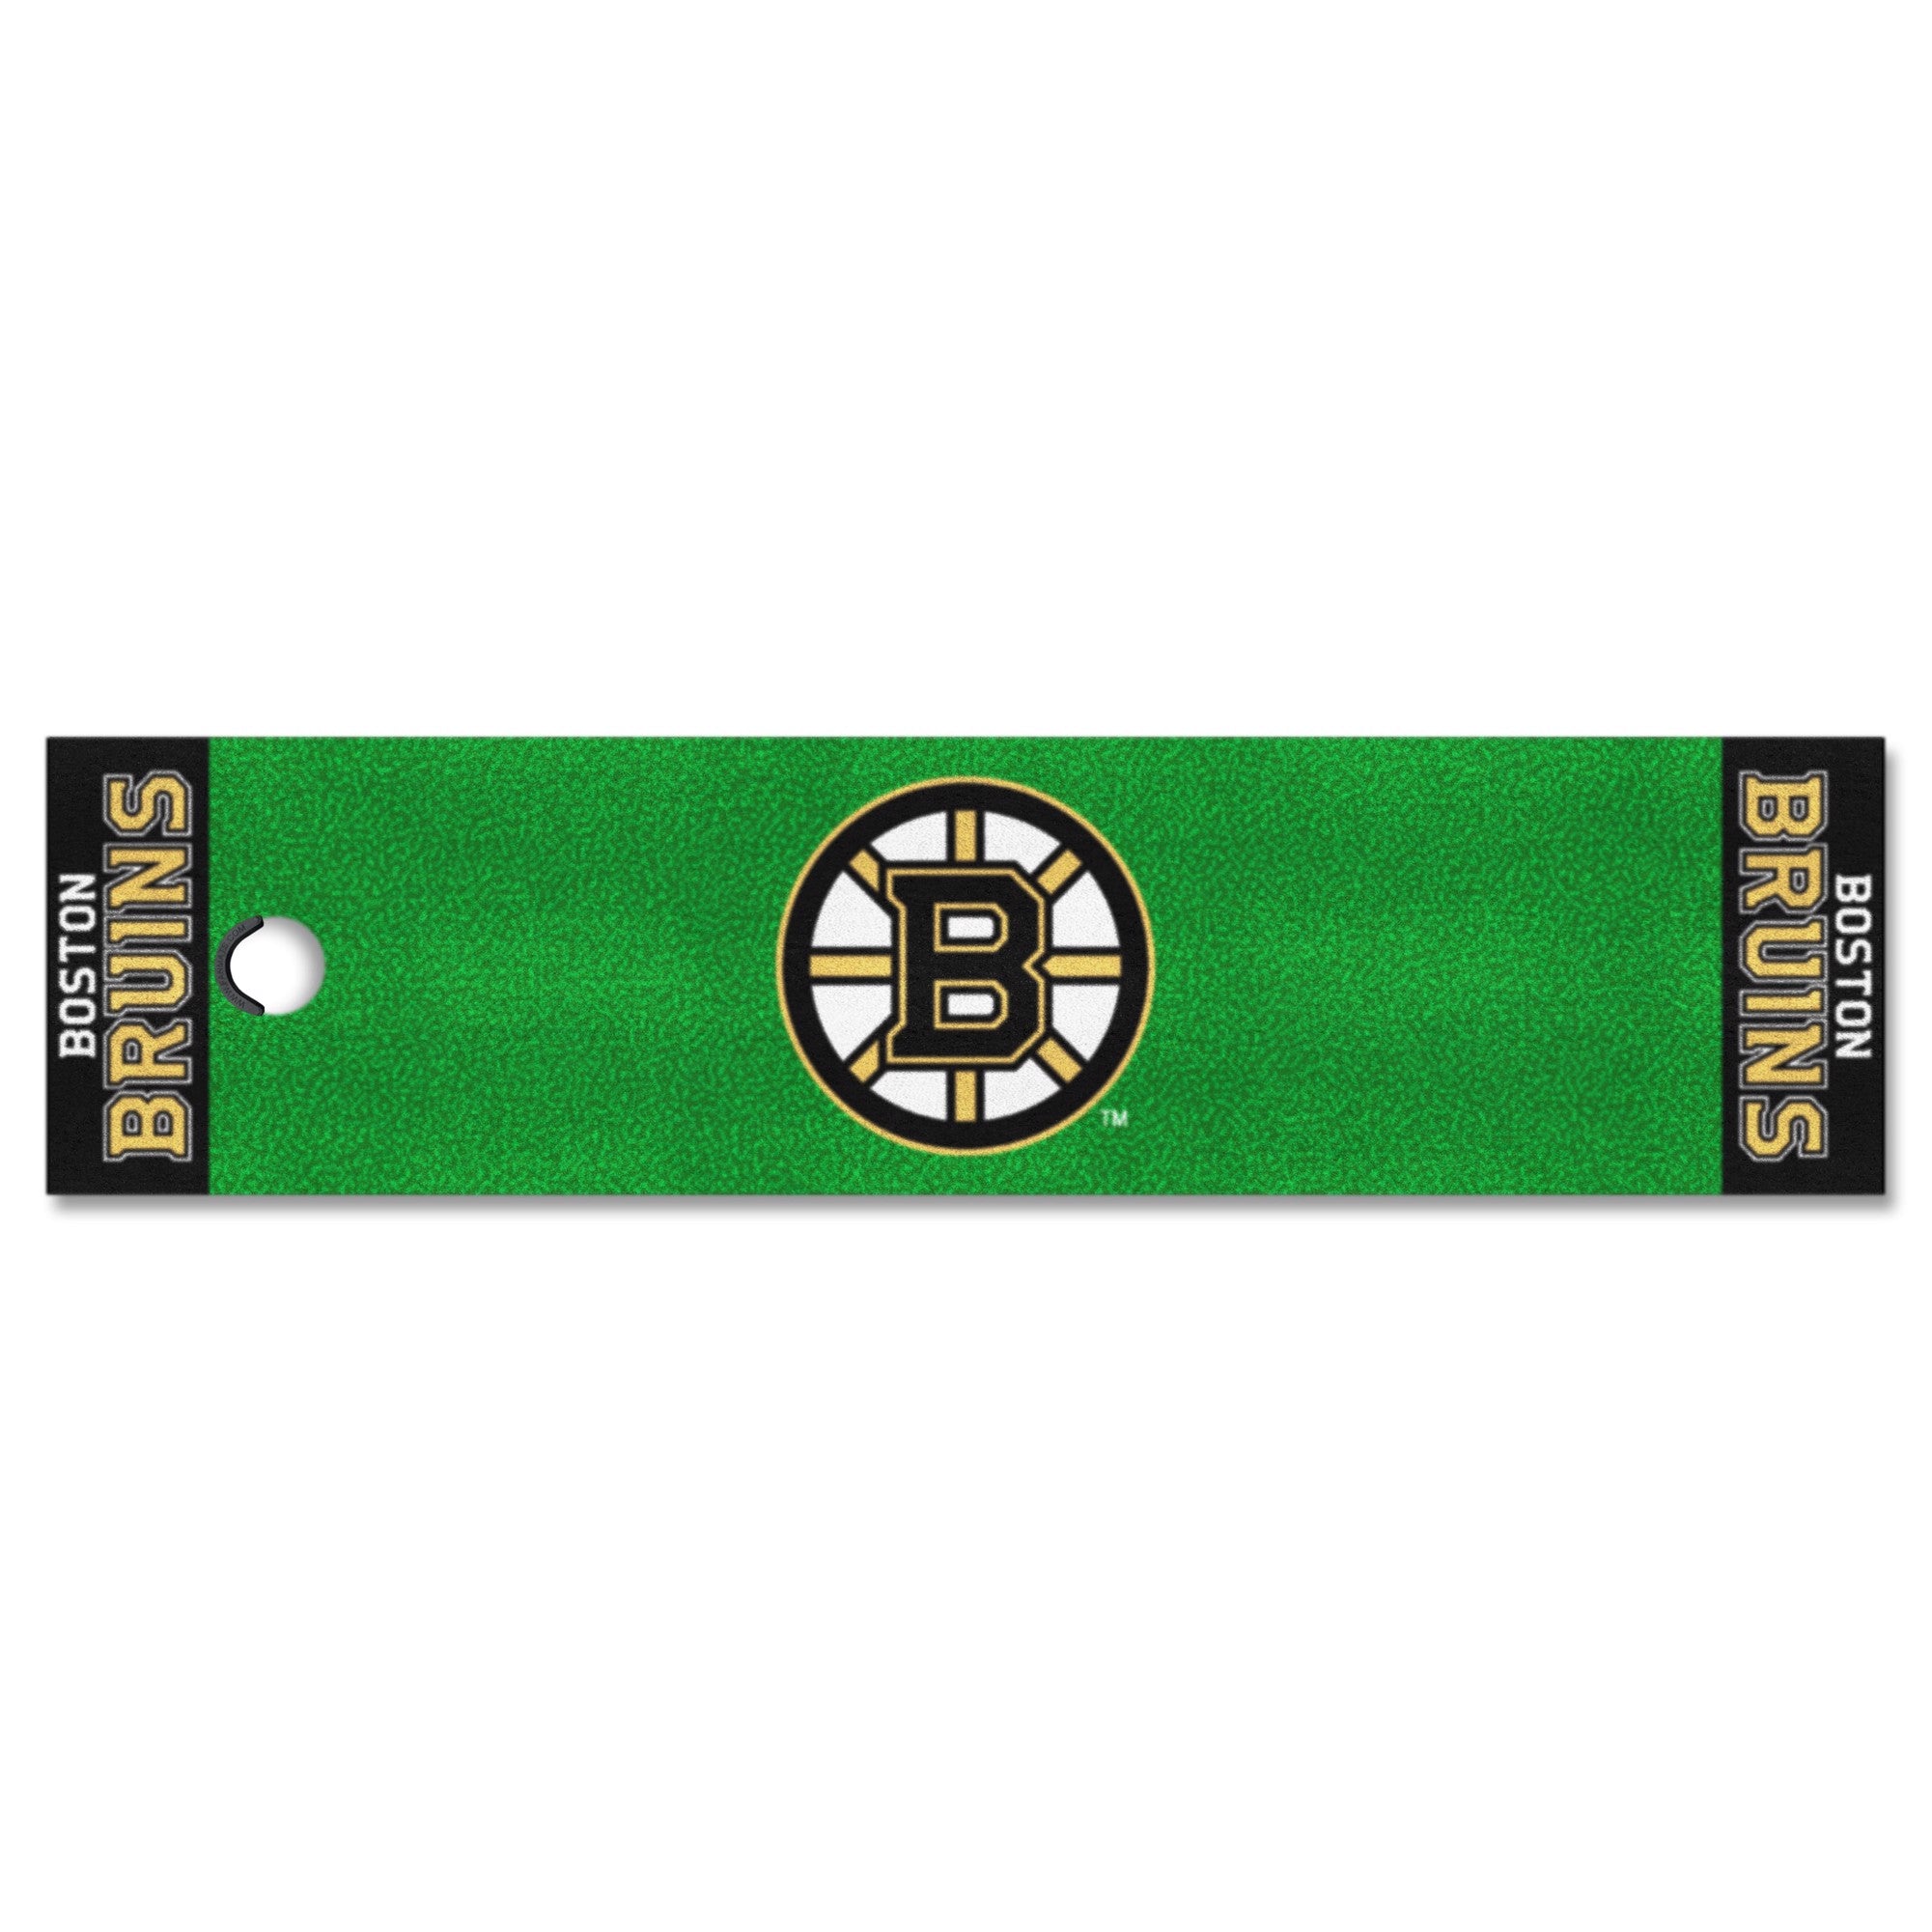 Boston Bruins Green Putting Mat by Fanmats